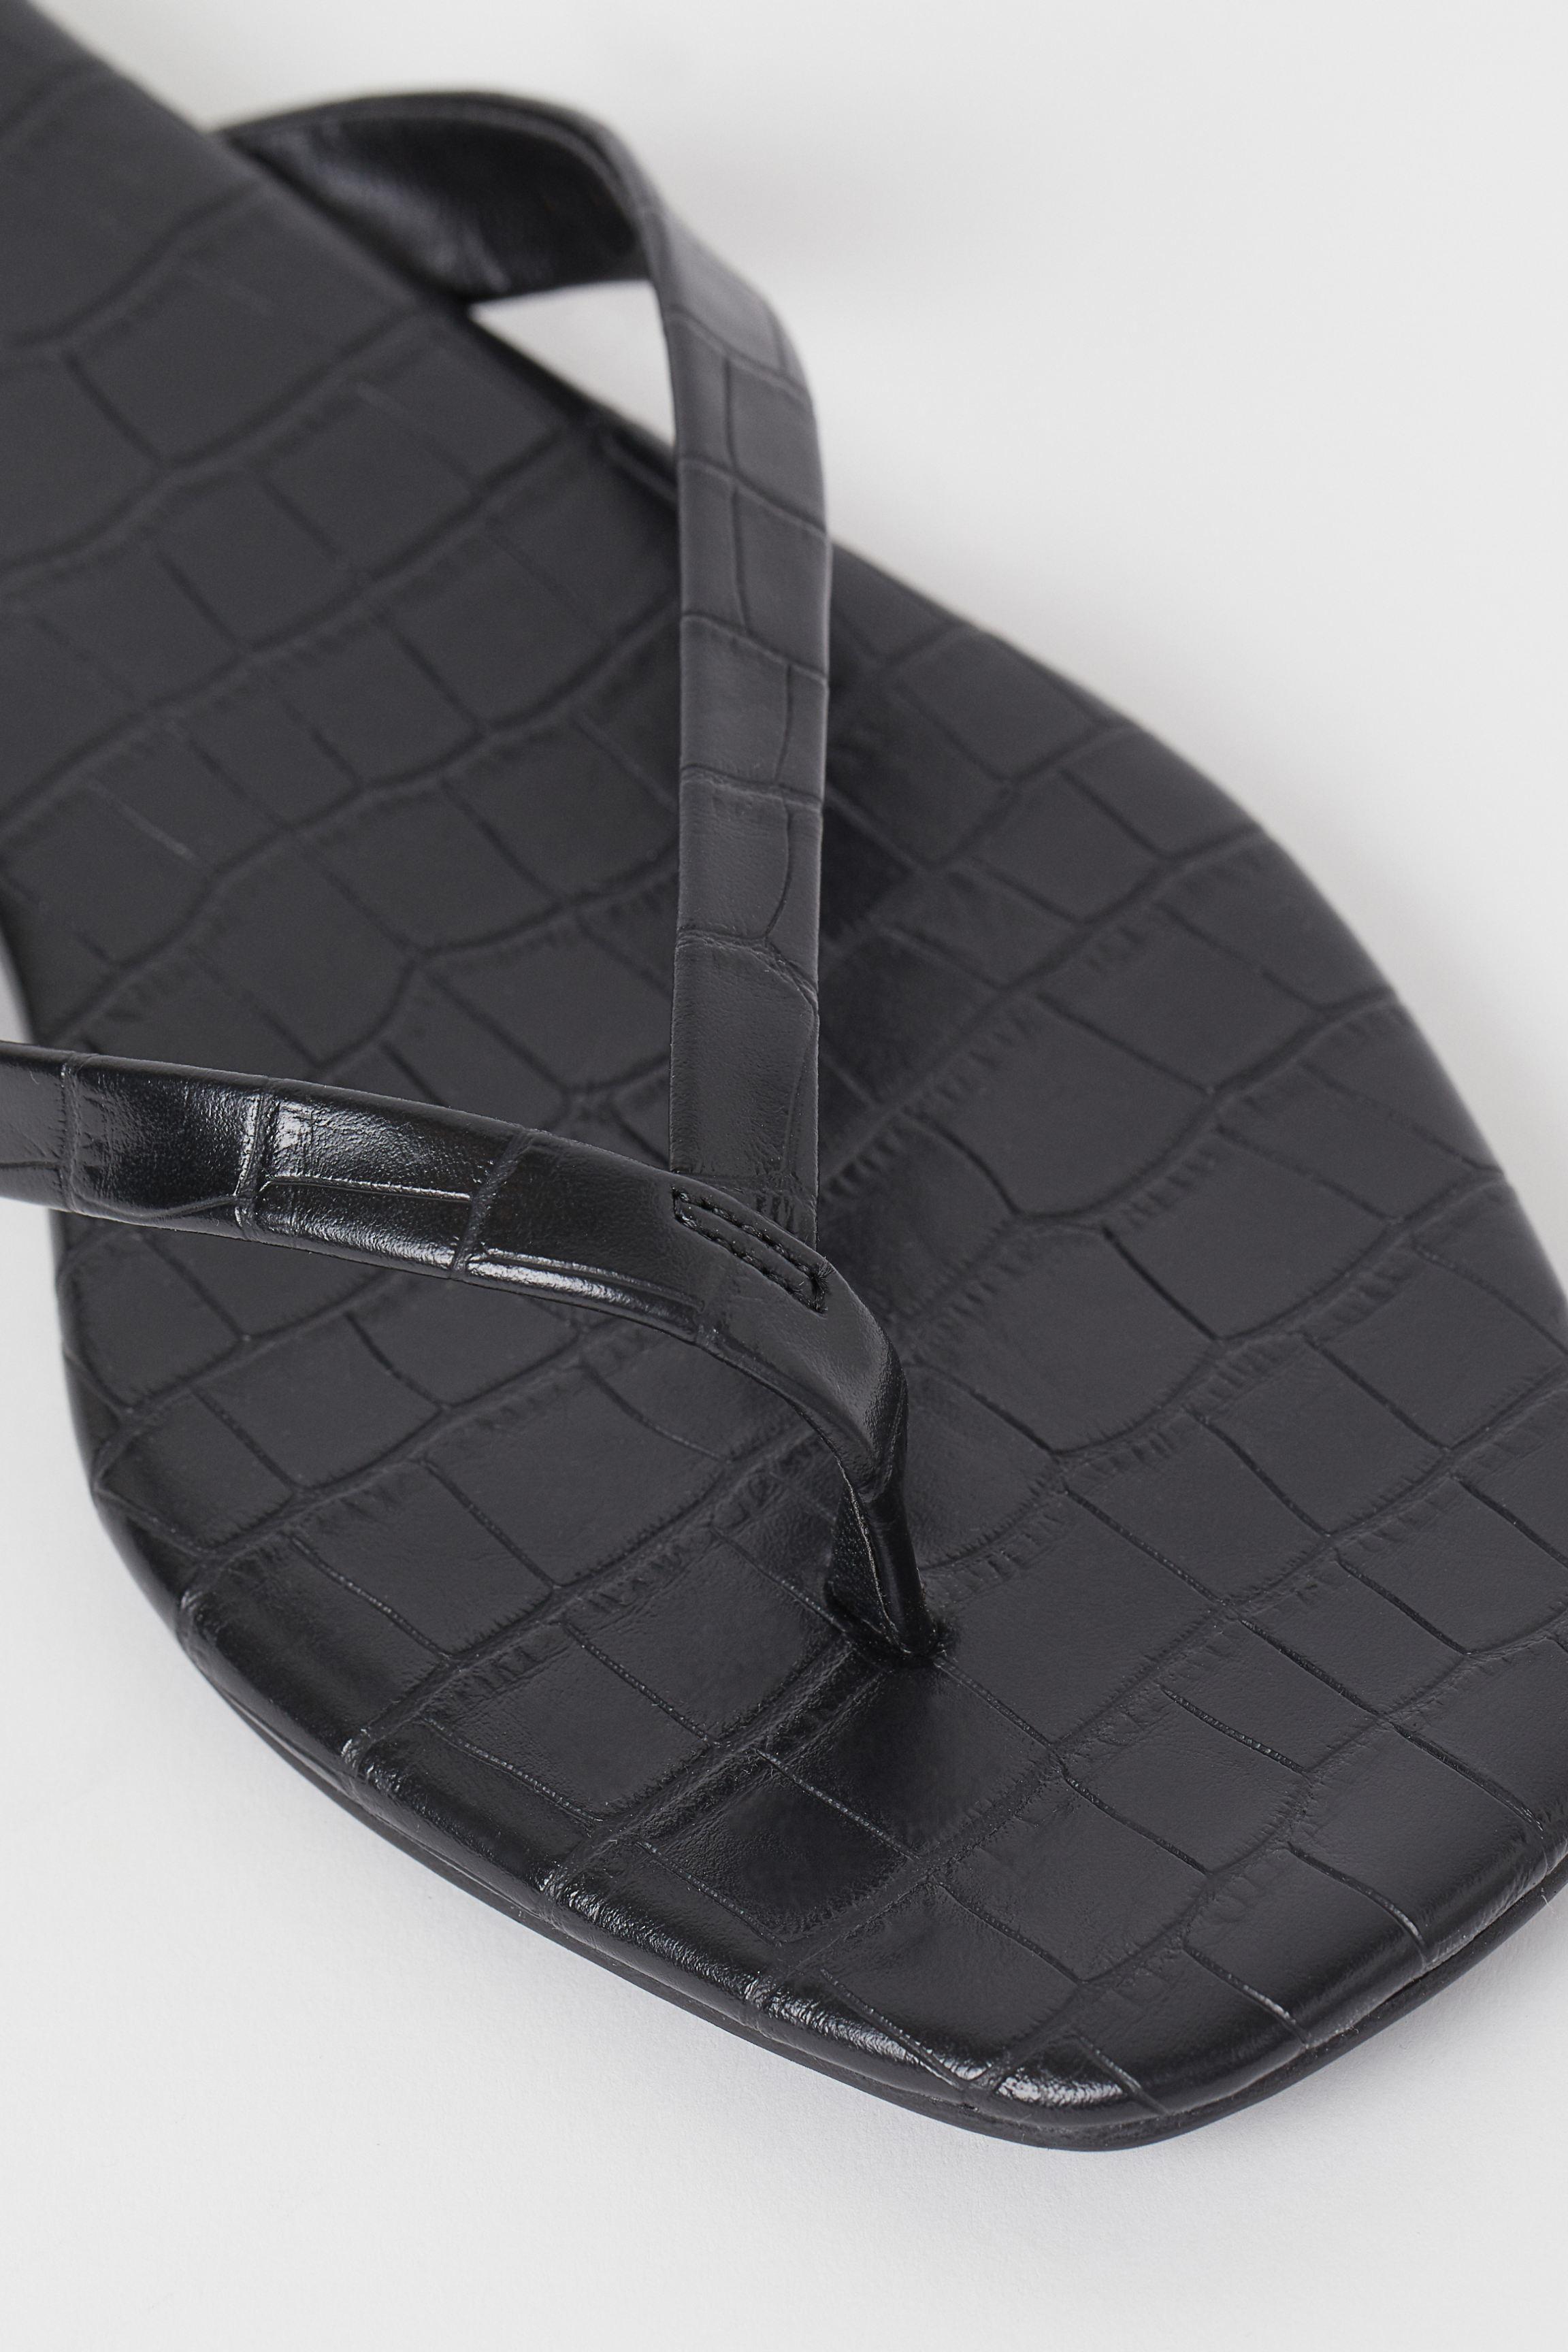 H&M Flip-flops in Black/Crocodile-Patterned (Black) - Lyst